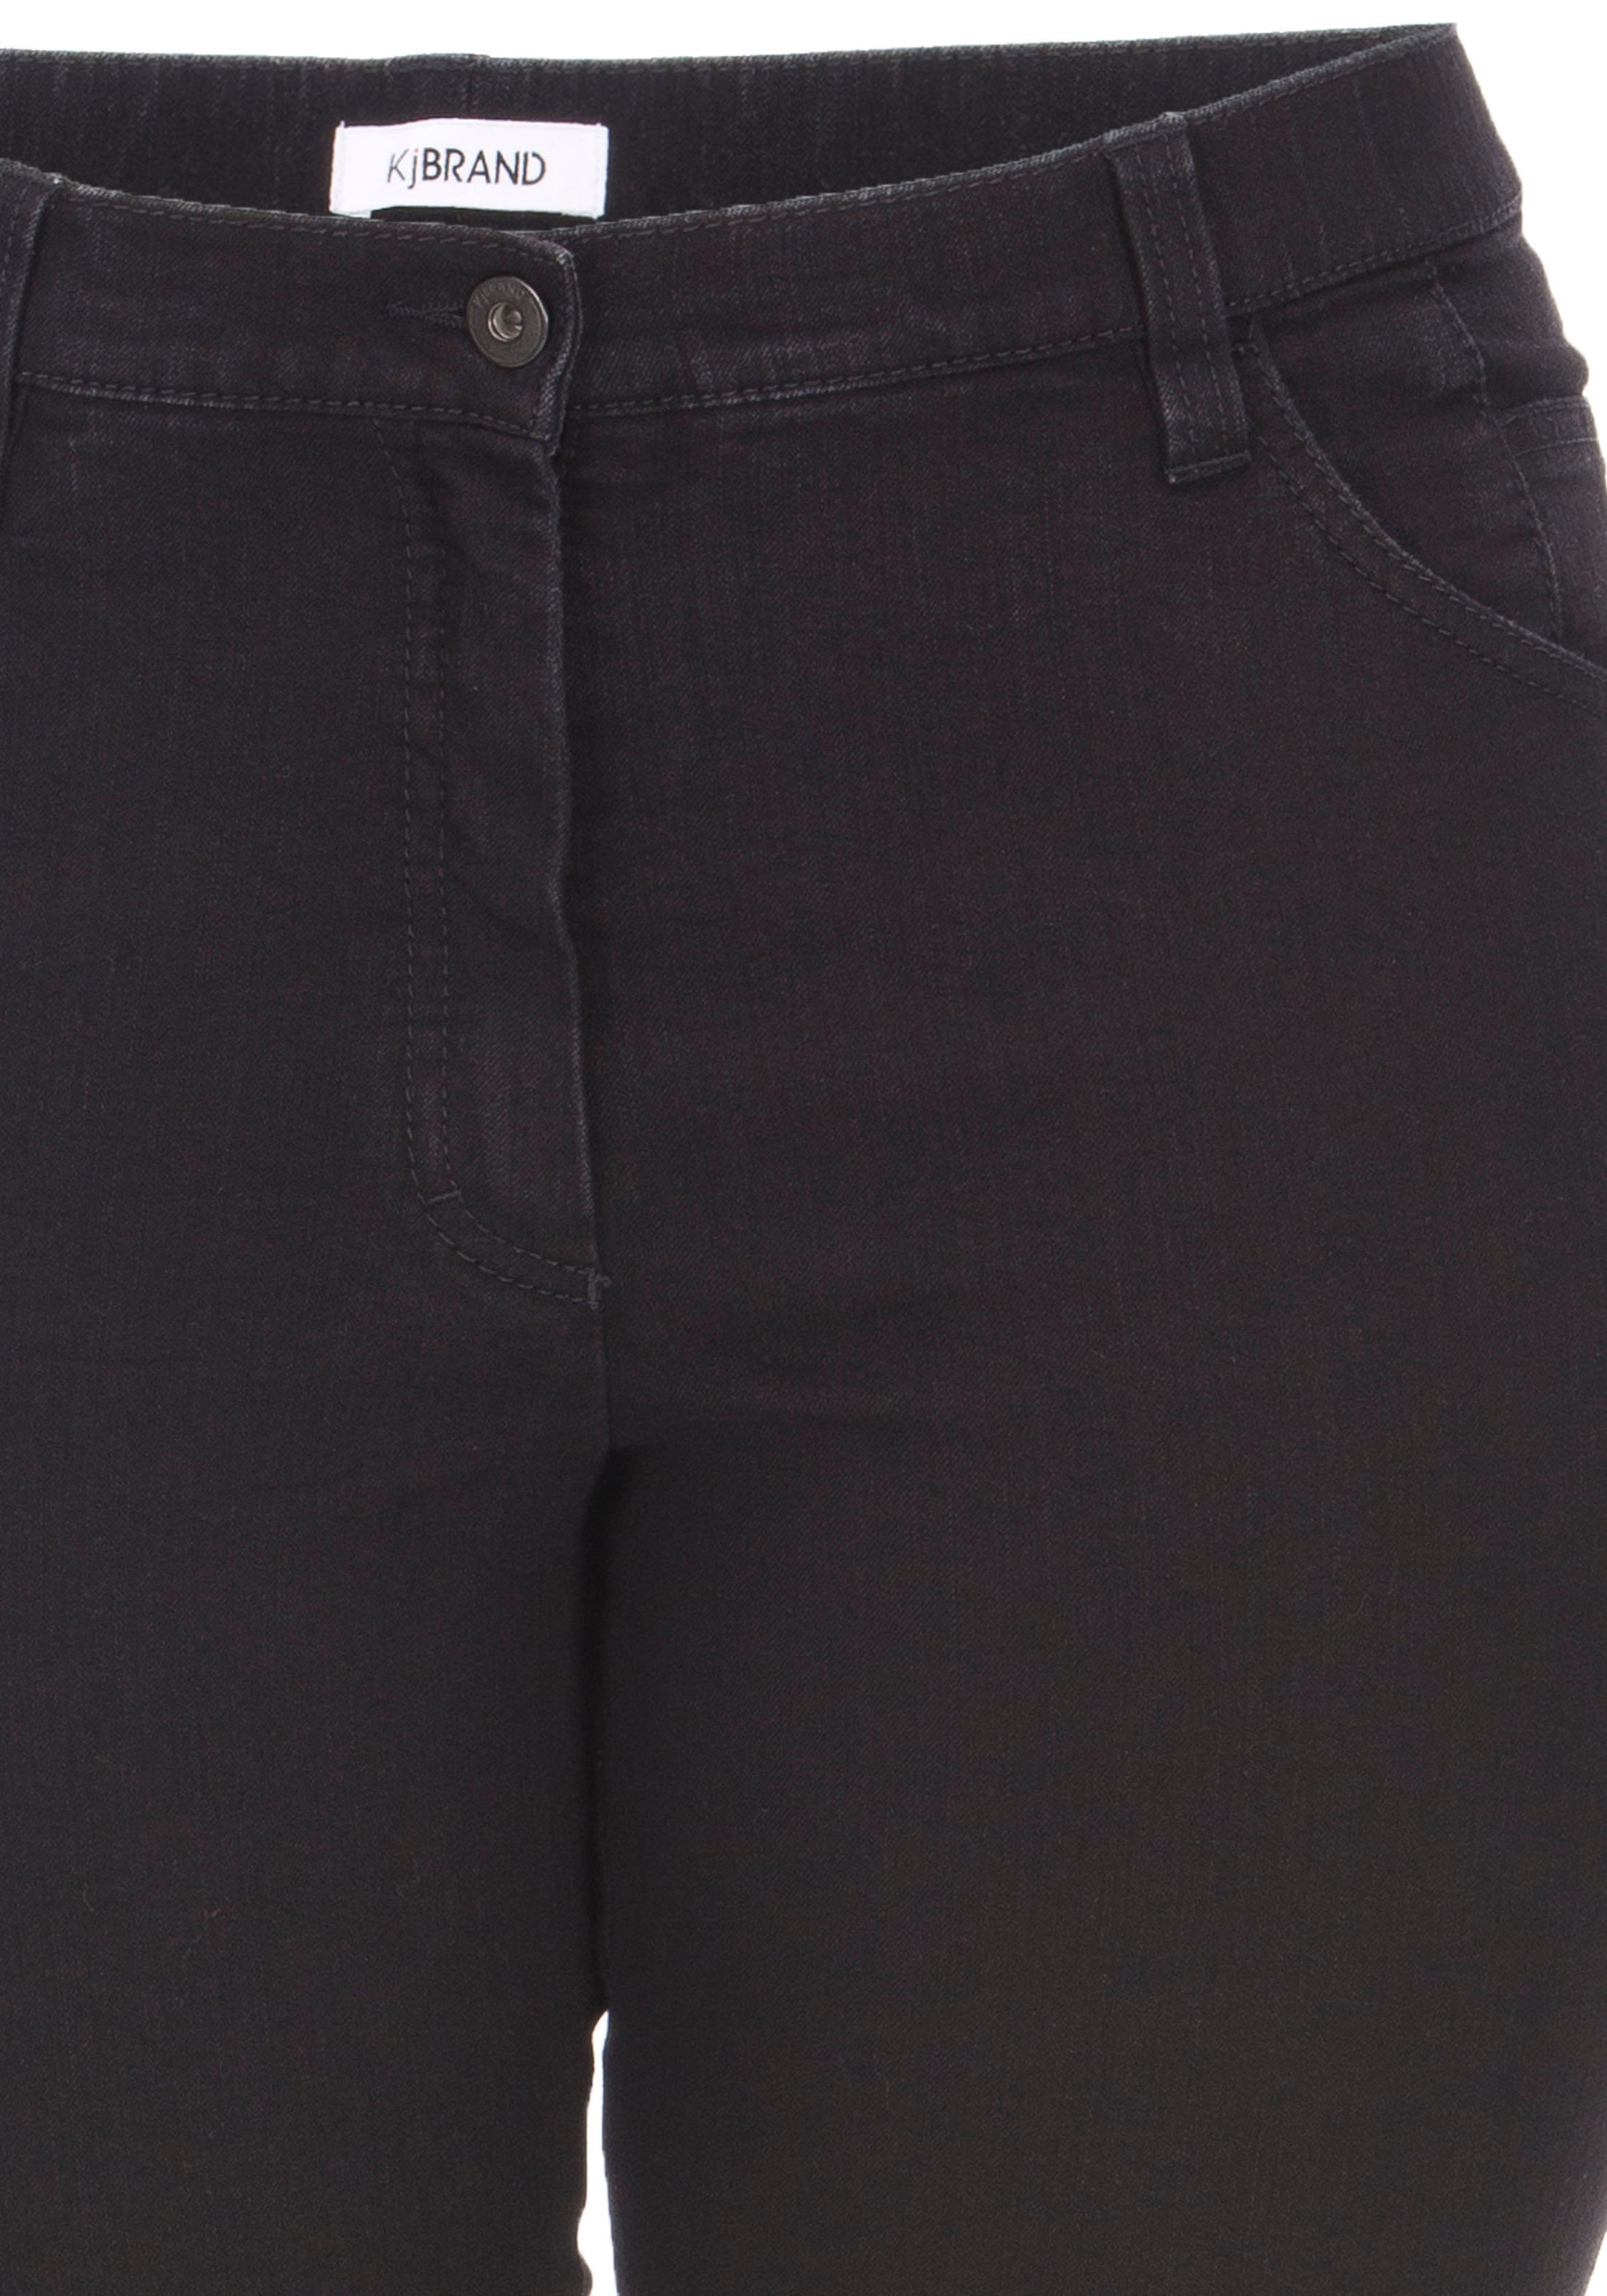 KjBRAND Stretch-Jeans mit BAUR CS »Betty kaufen Stretch«, für | Denim Stretch